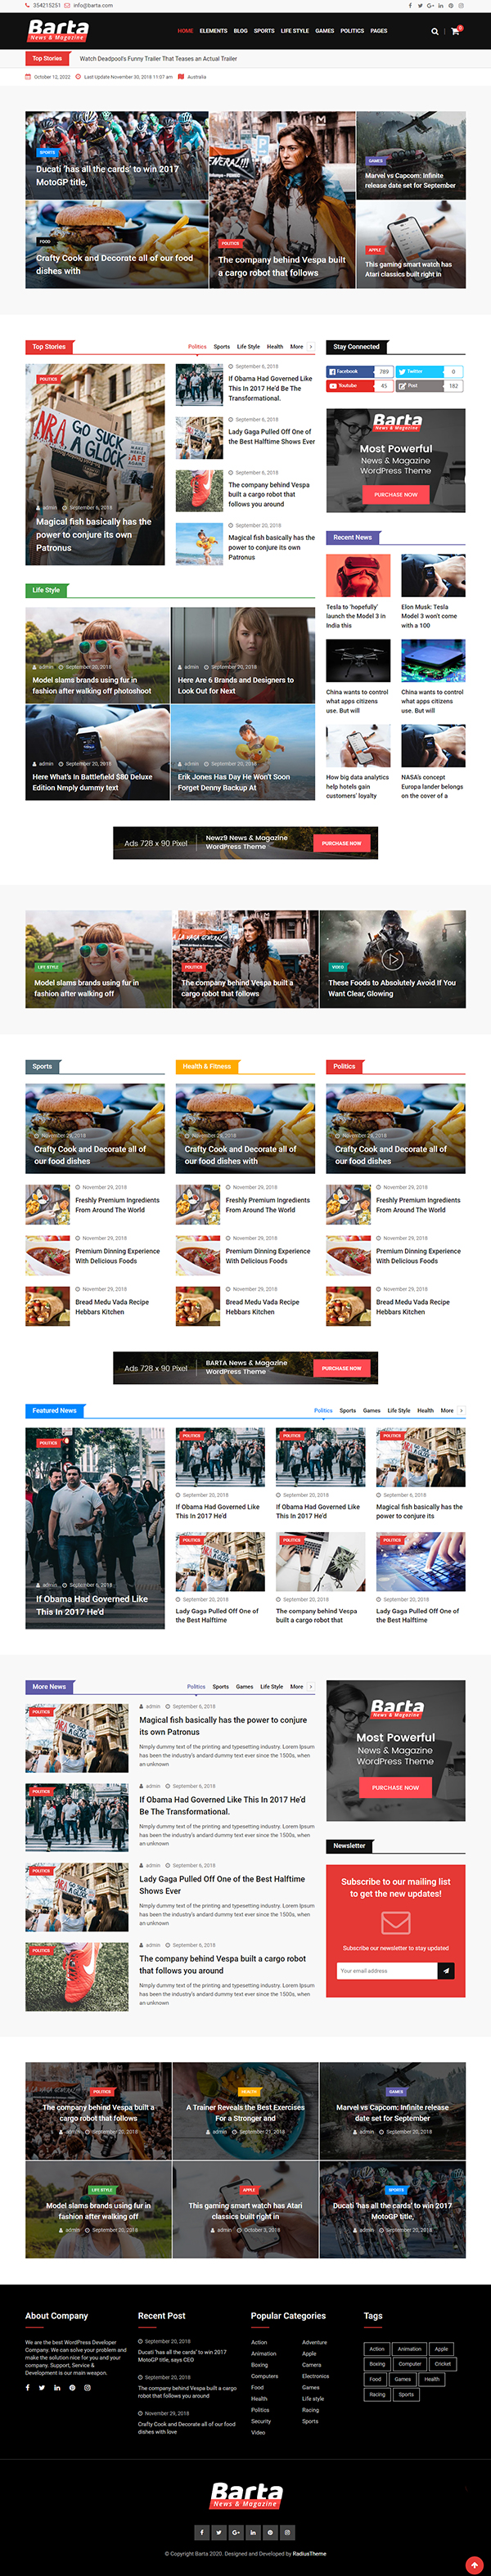 Barta – News & Magazine WordPress Theme